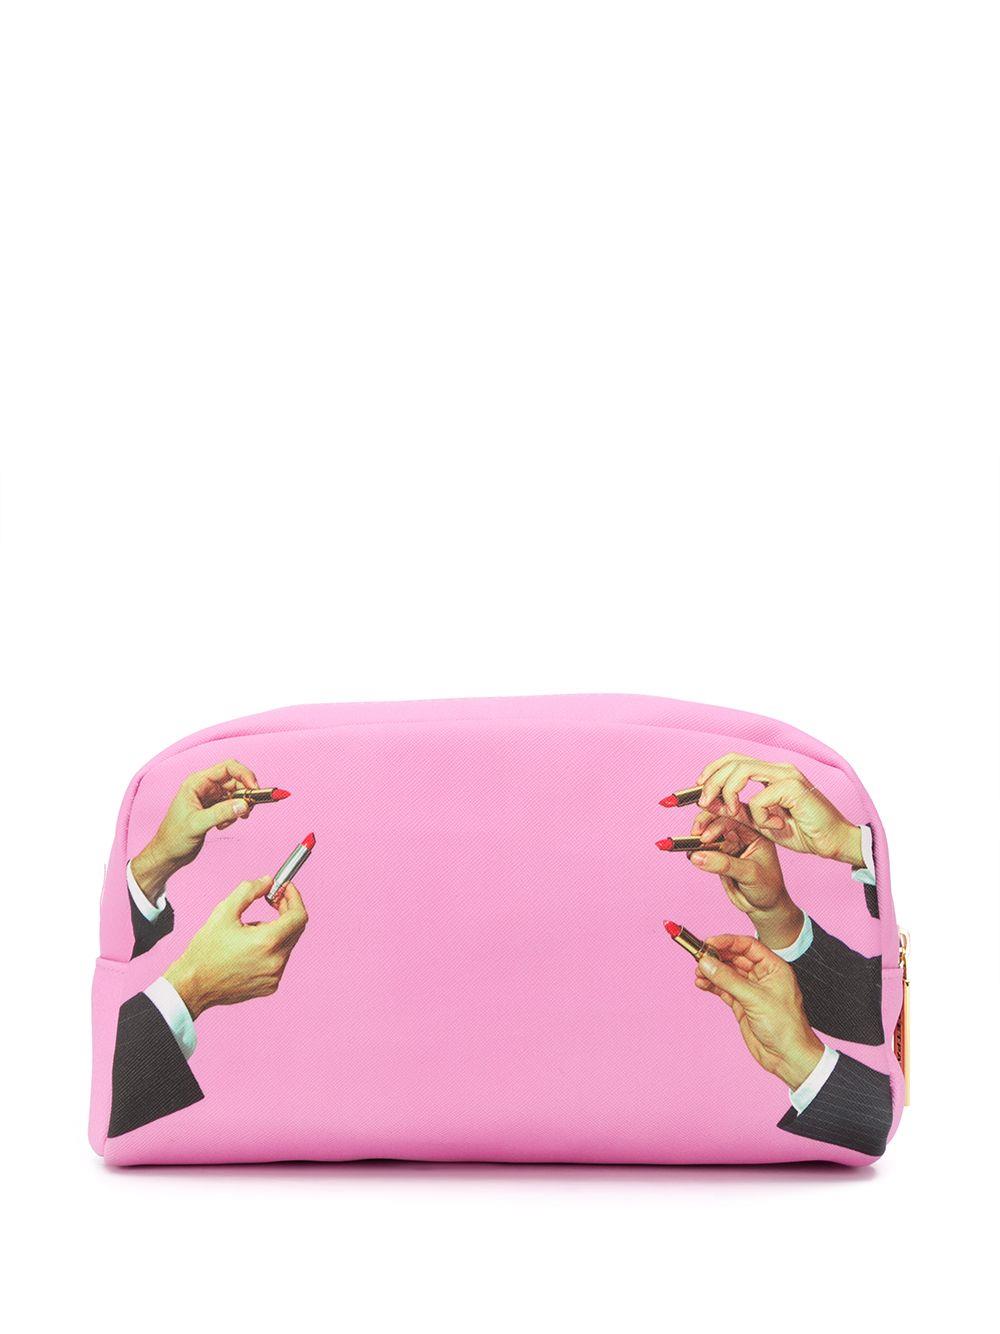 Seletti lipstick print makeup bag - Pink